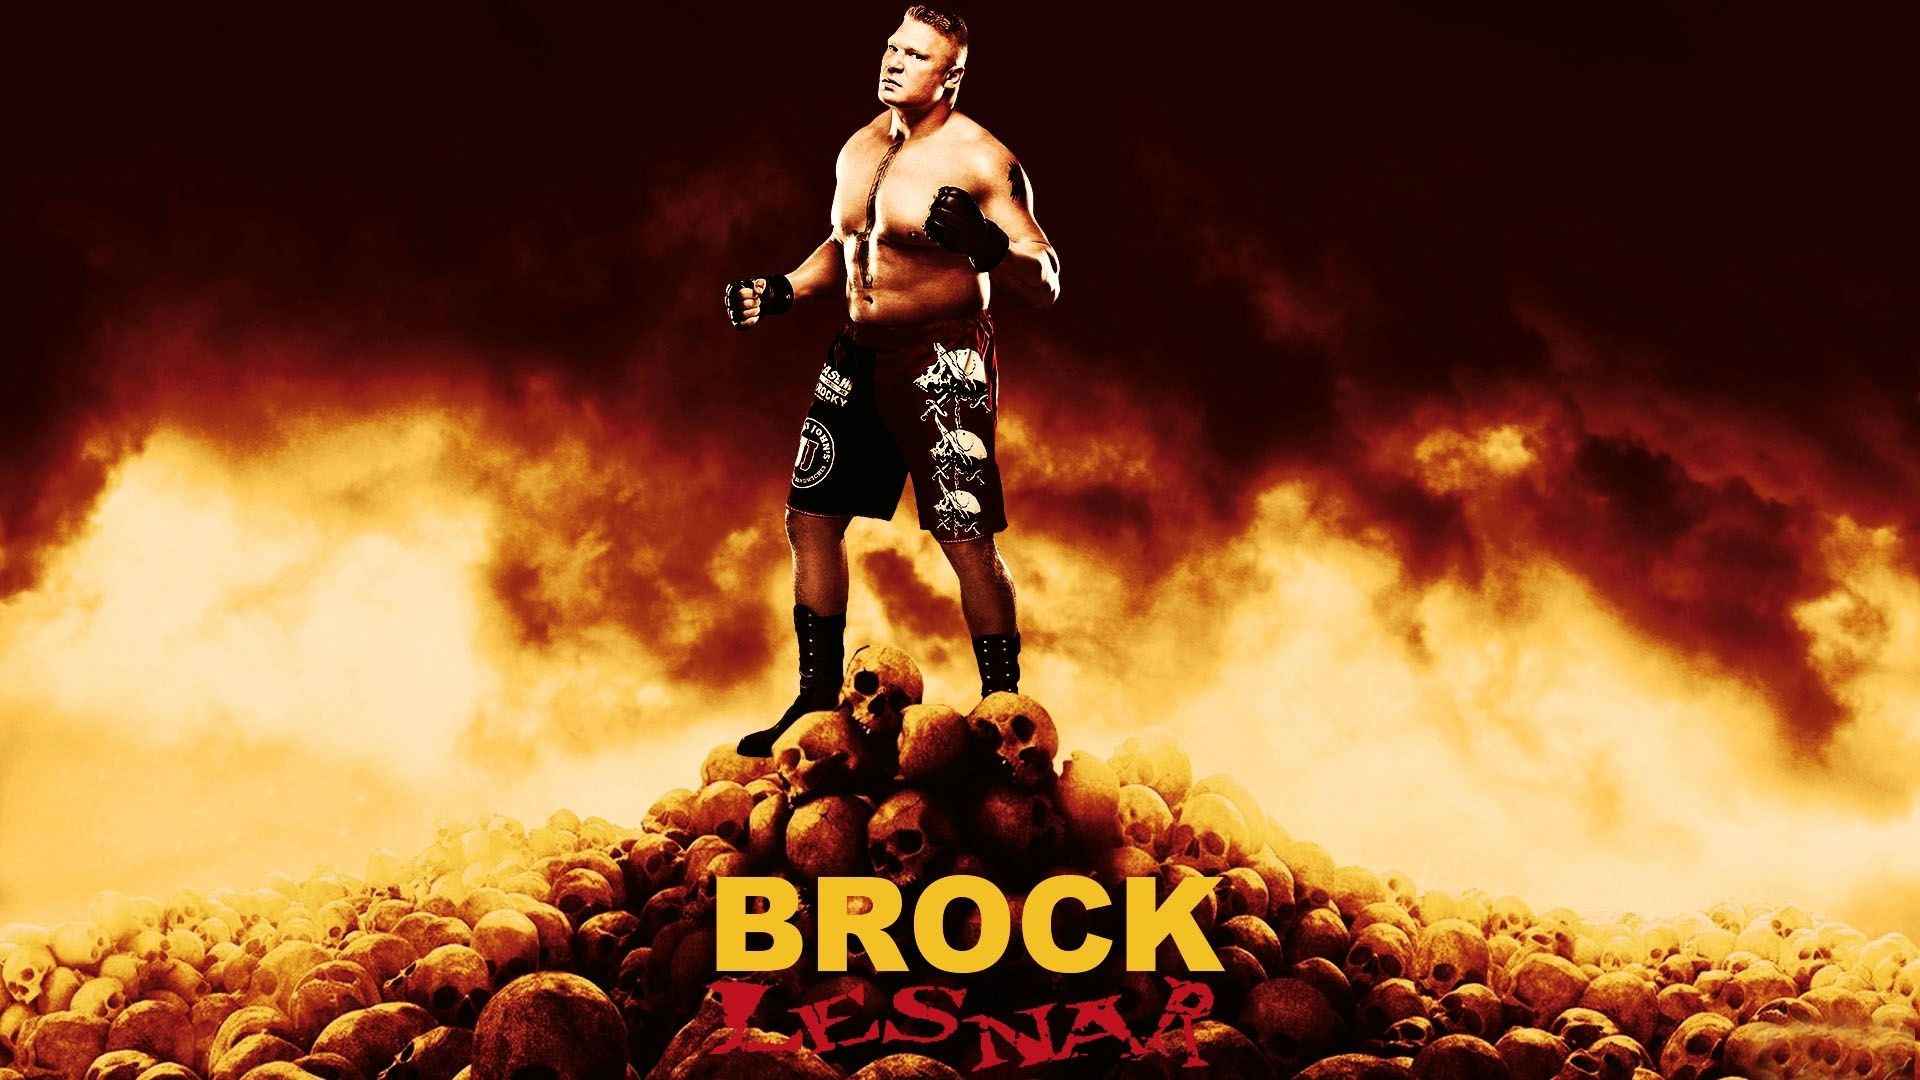 Brock Lesnar Pictures